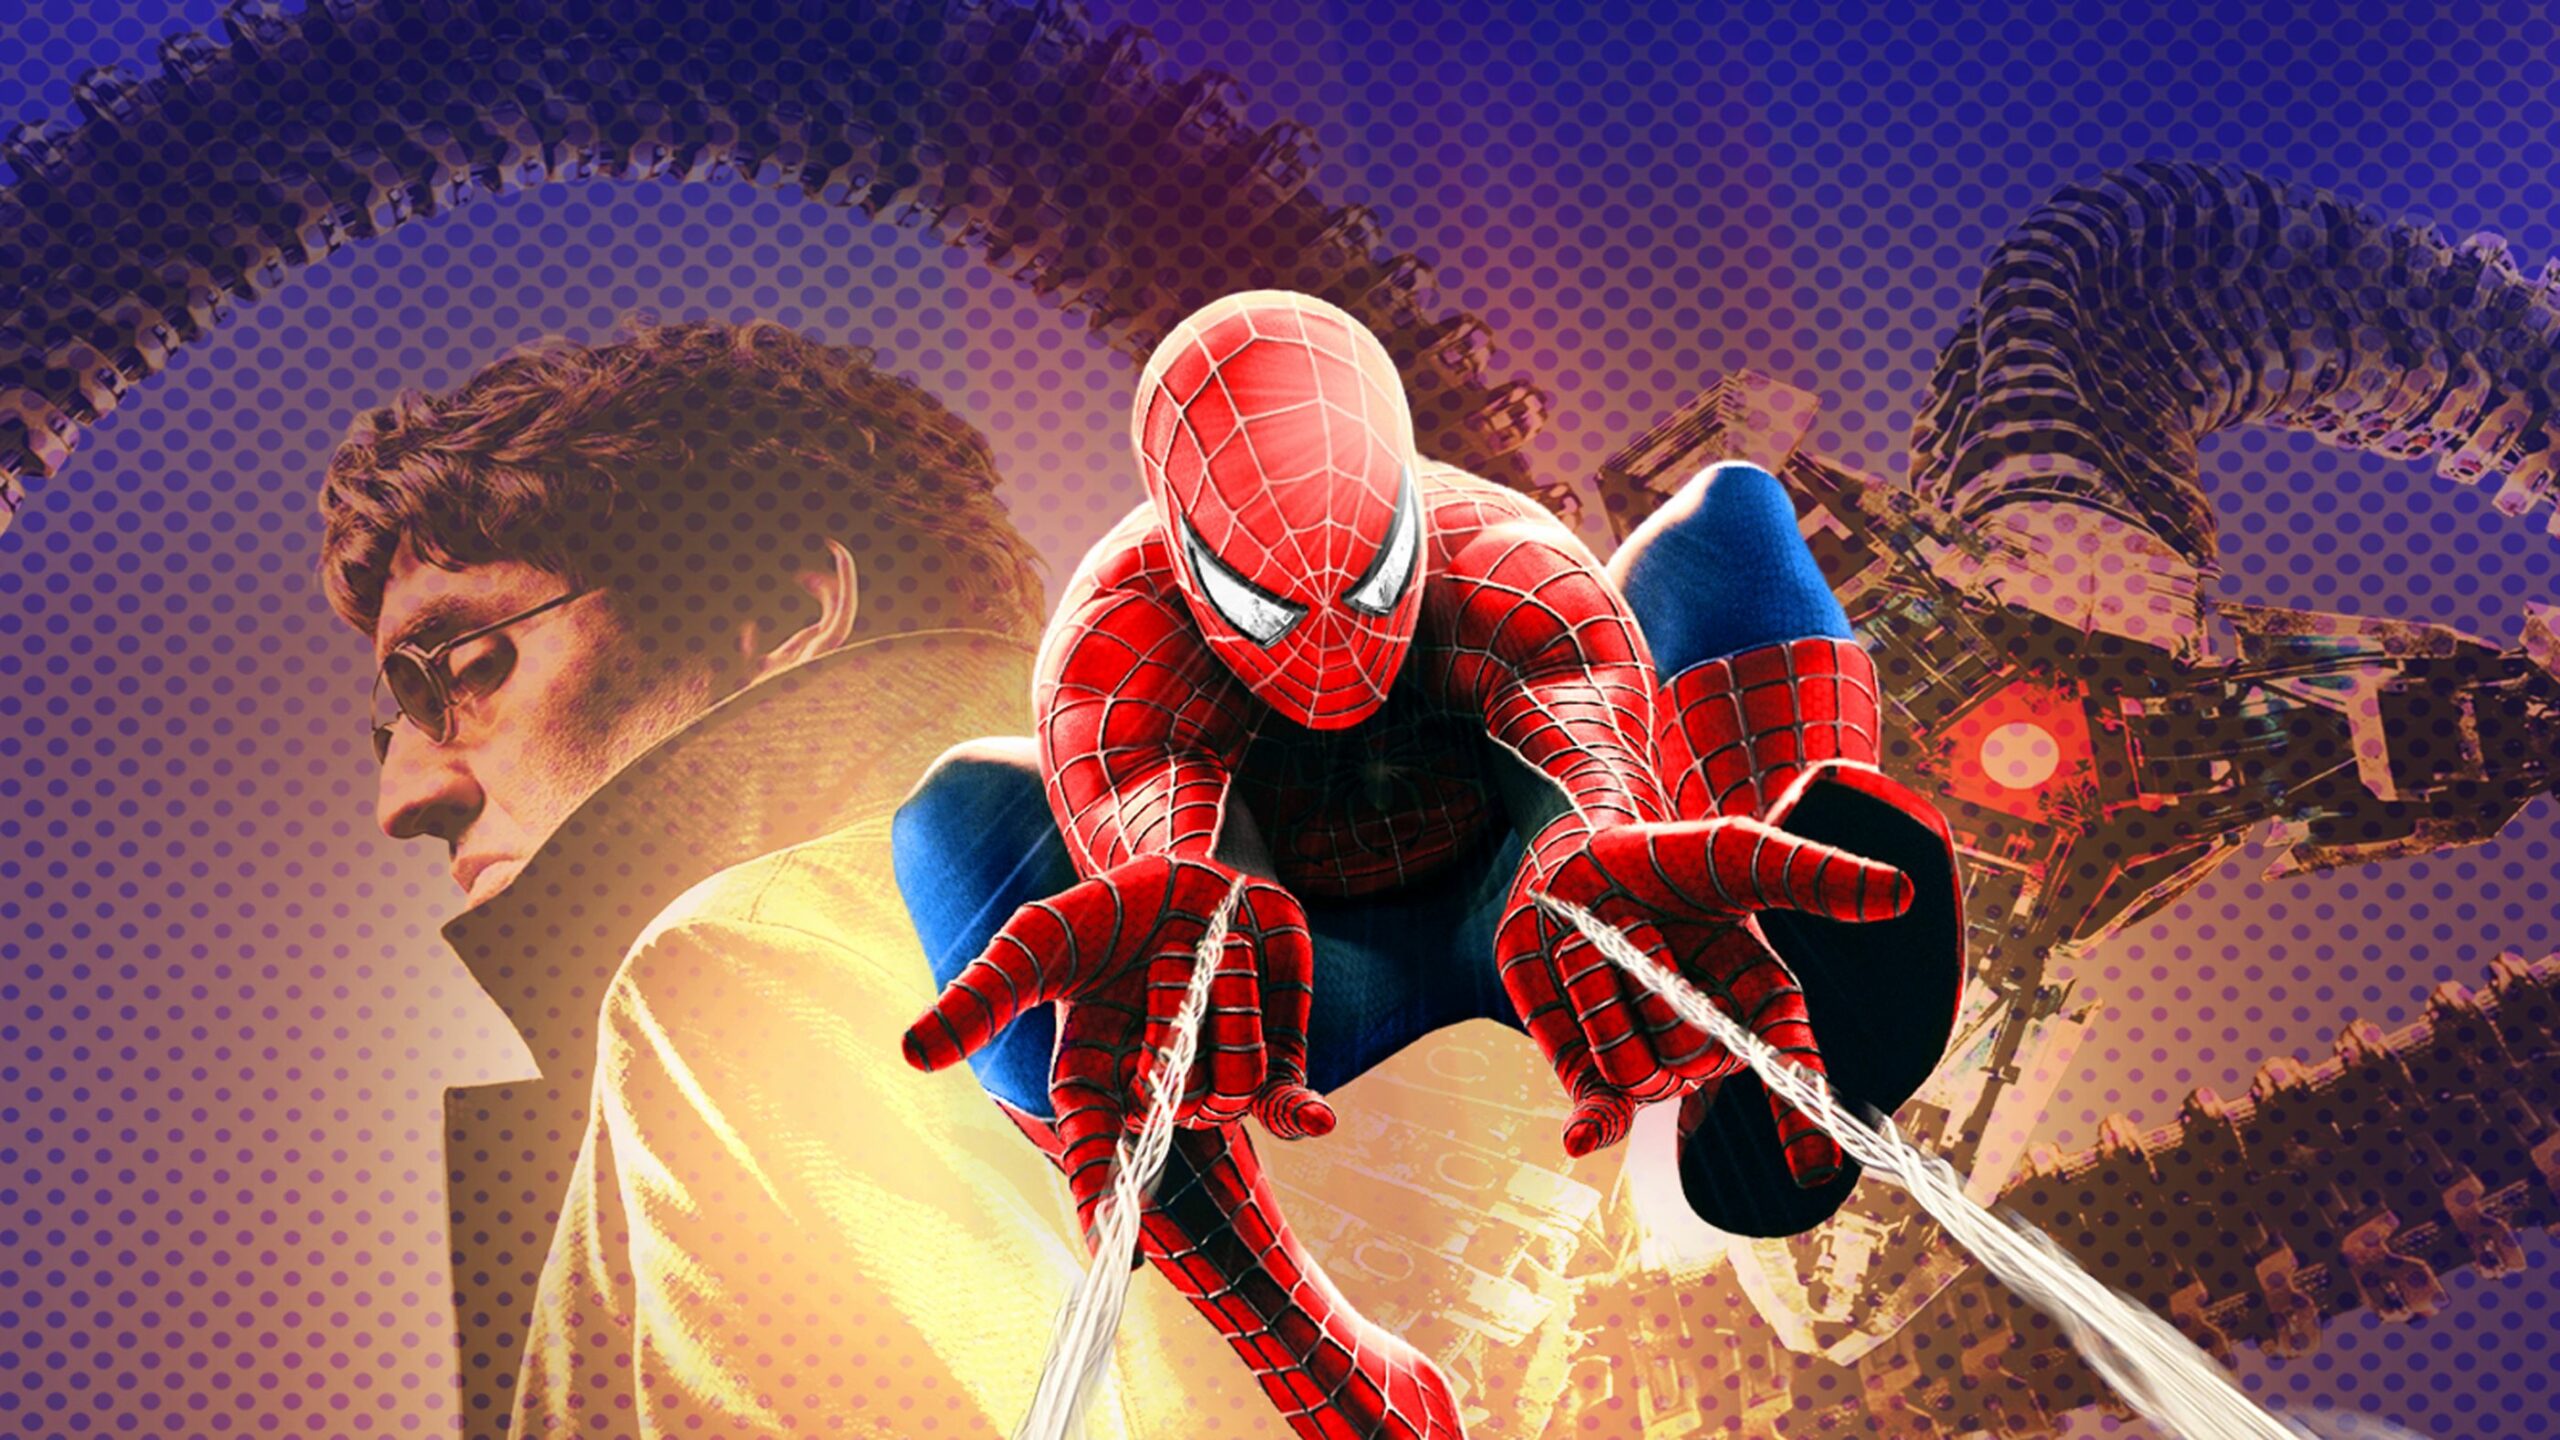 PS5 Games - Spider-Man 2 